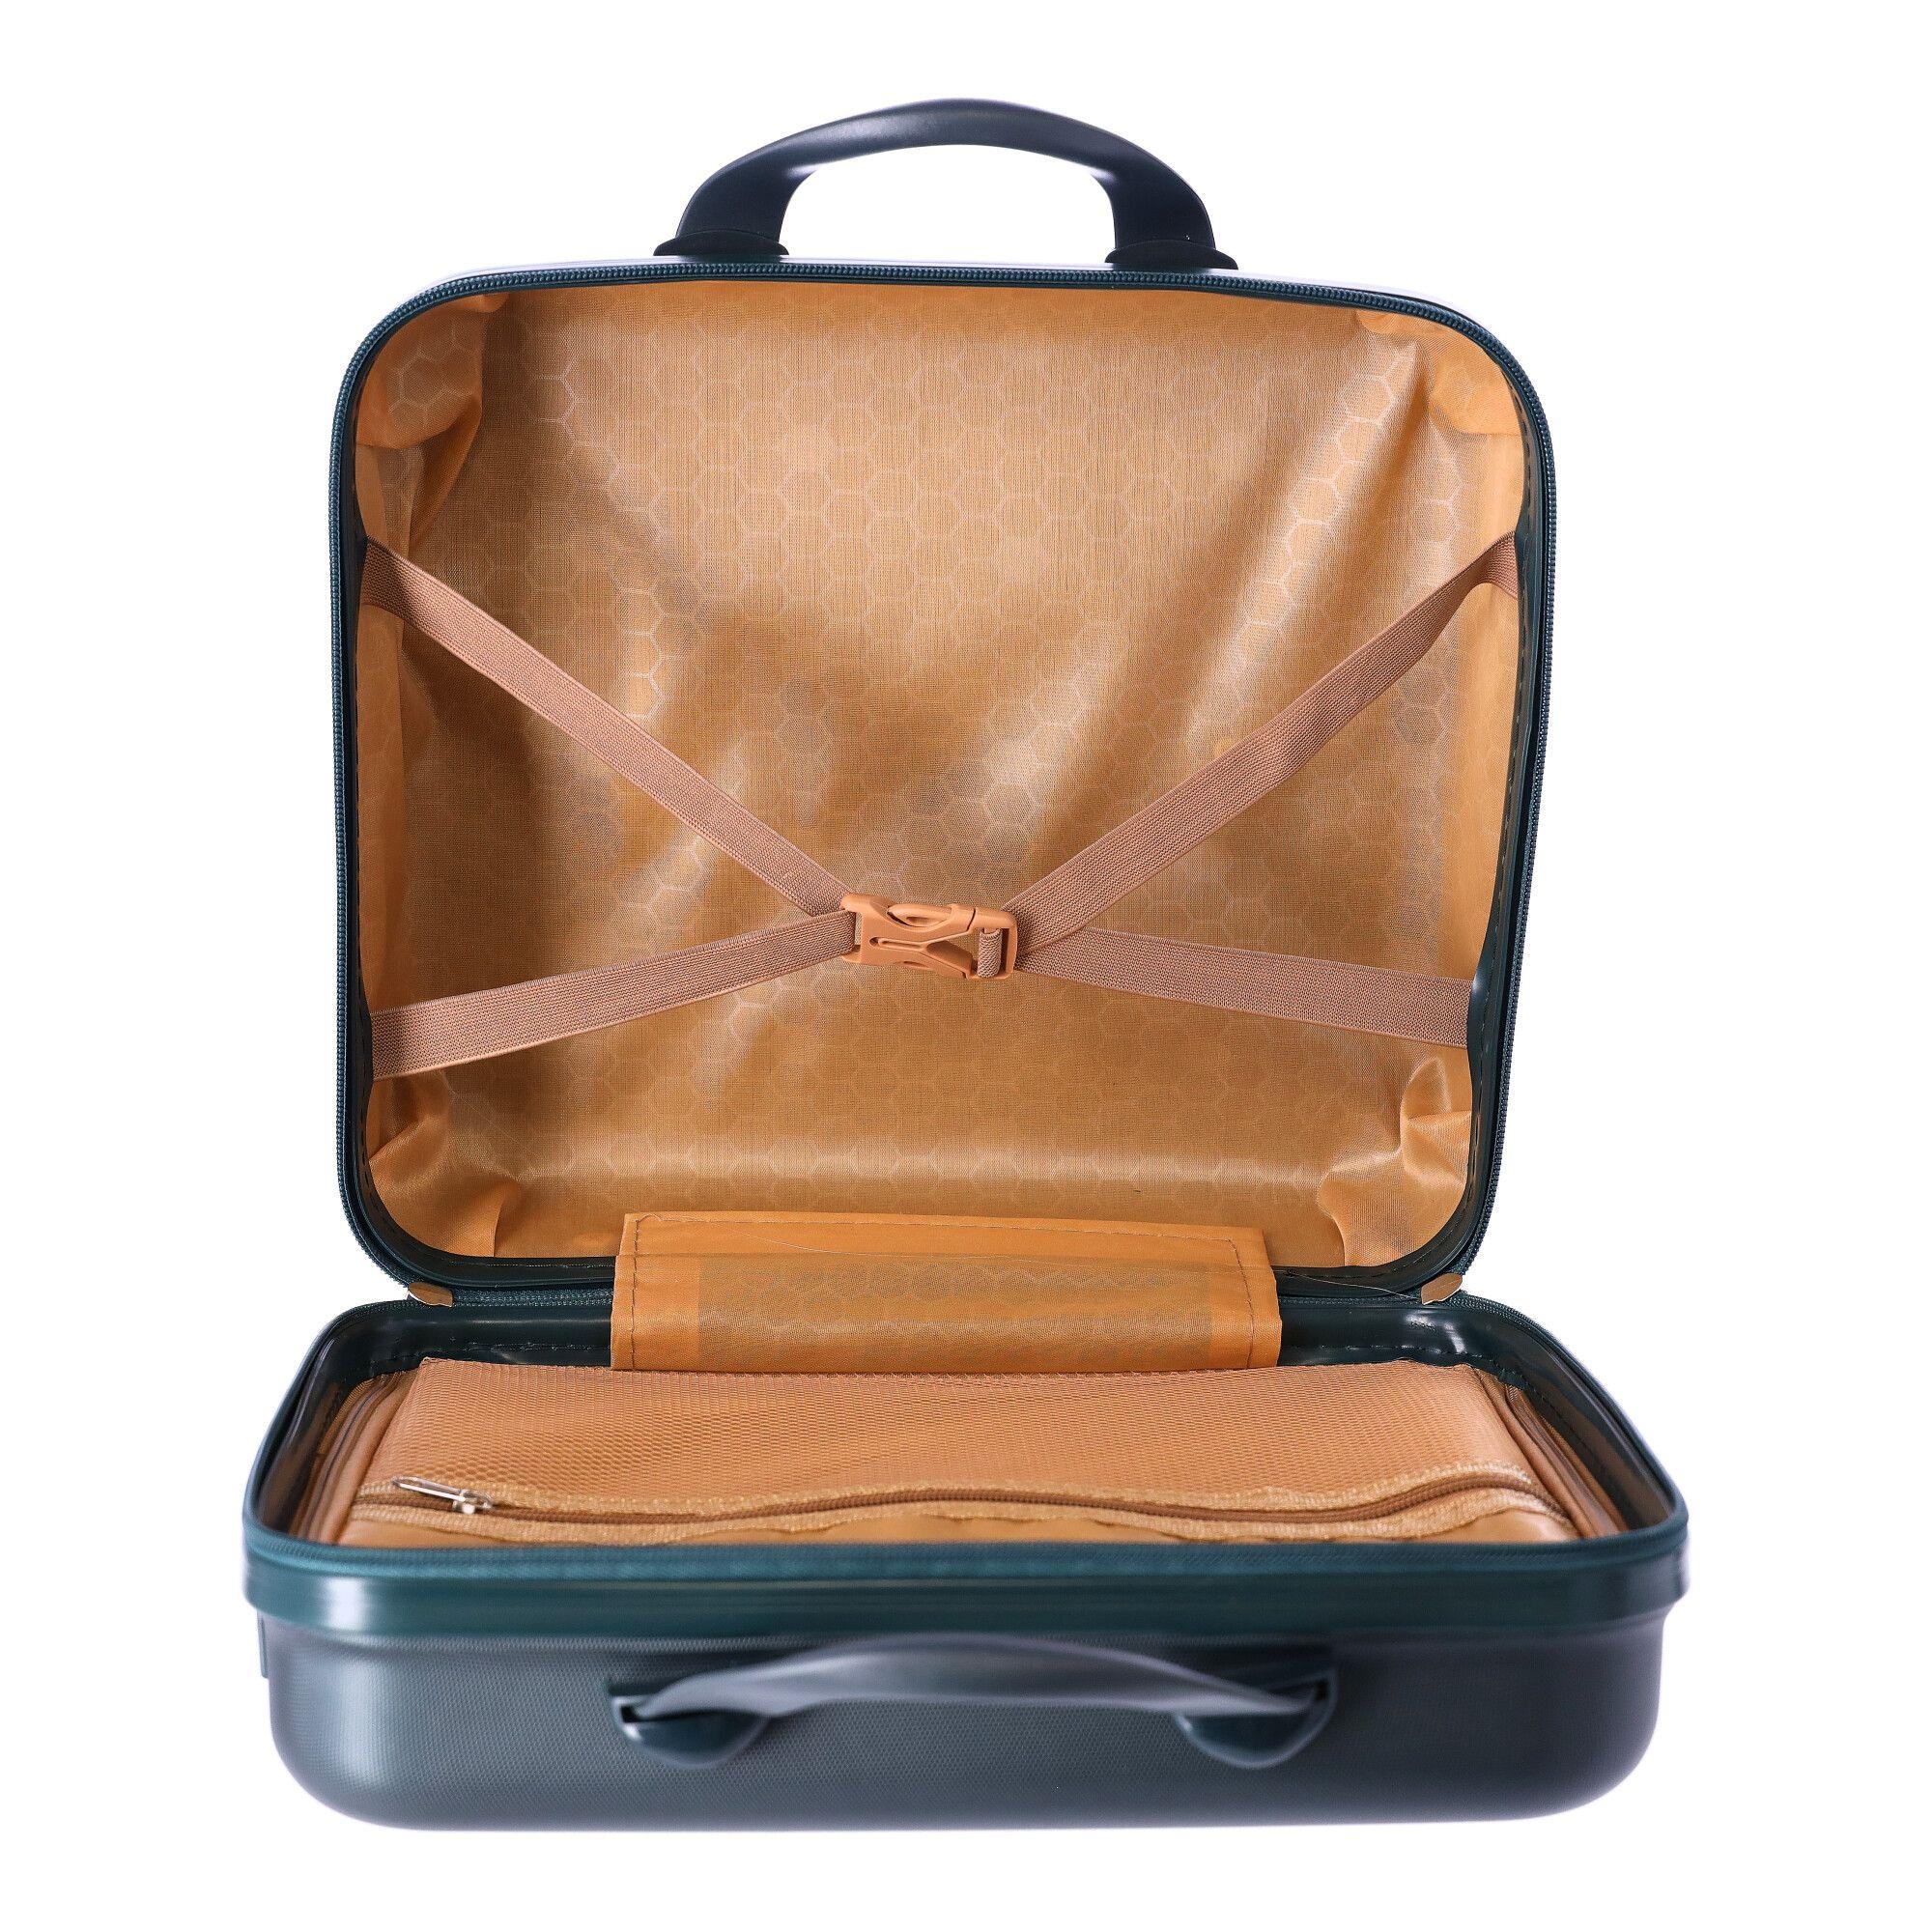 Children's luggage / Lovely travel cosmetic bag - dark green